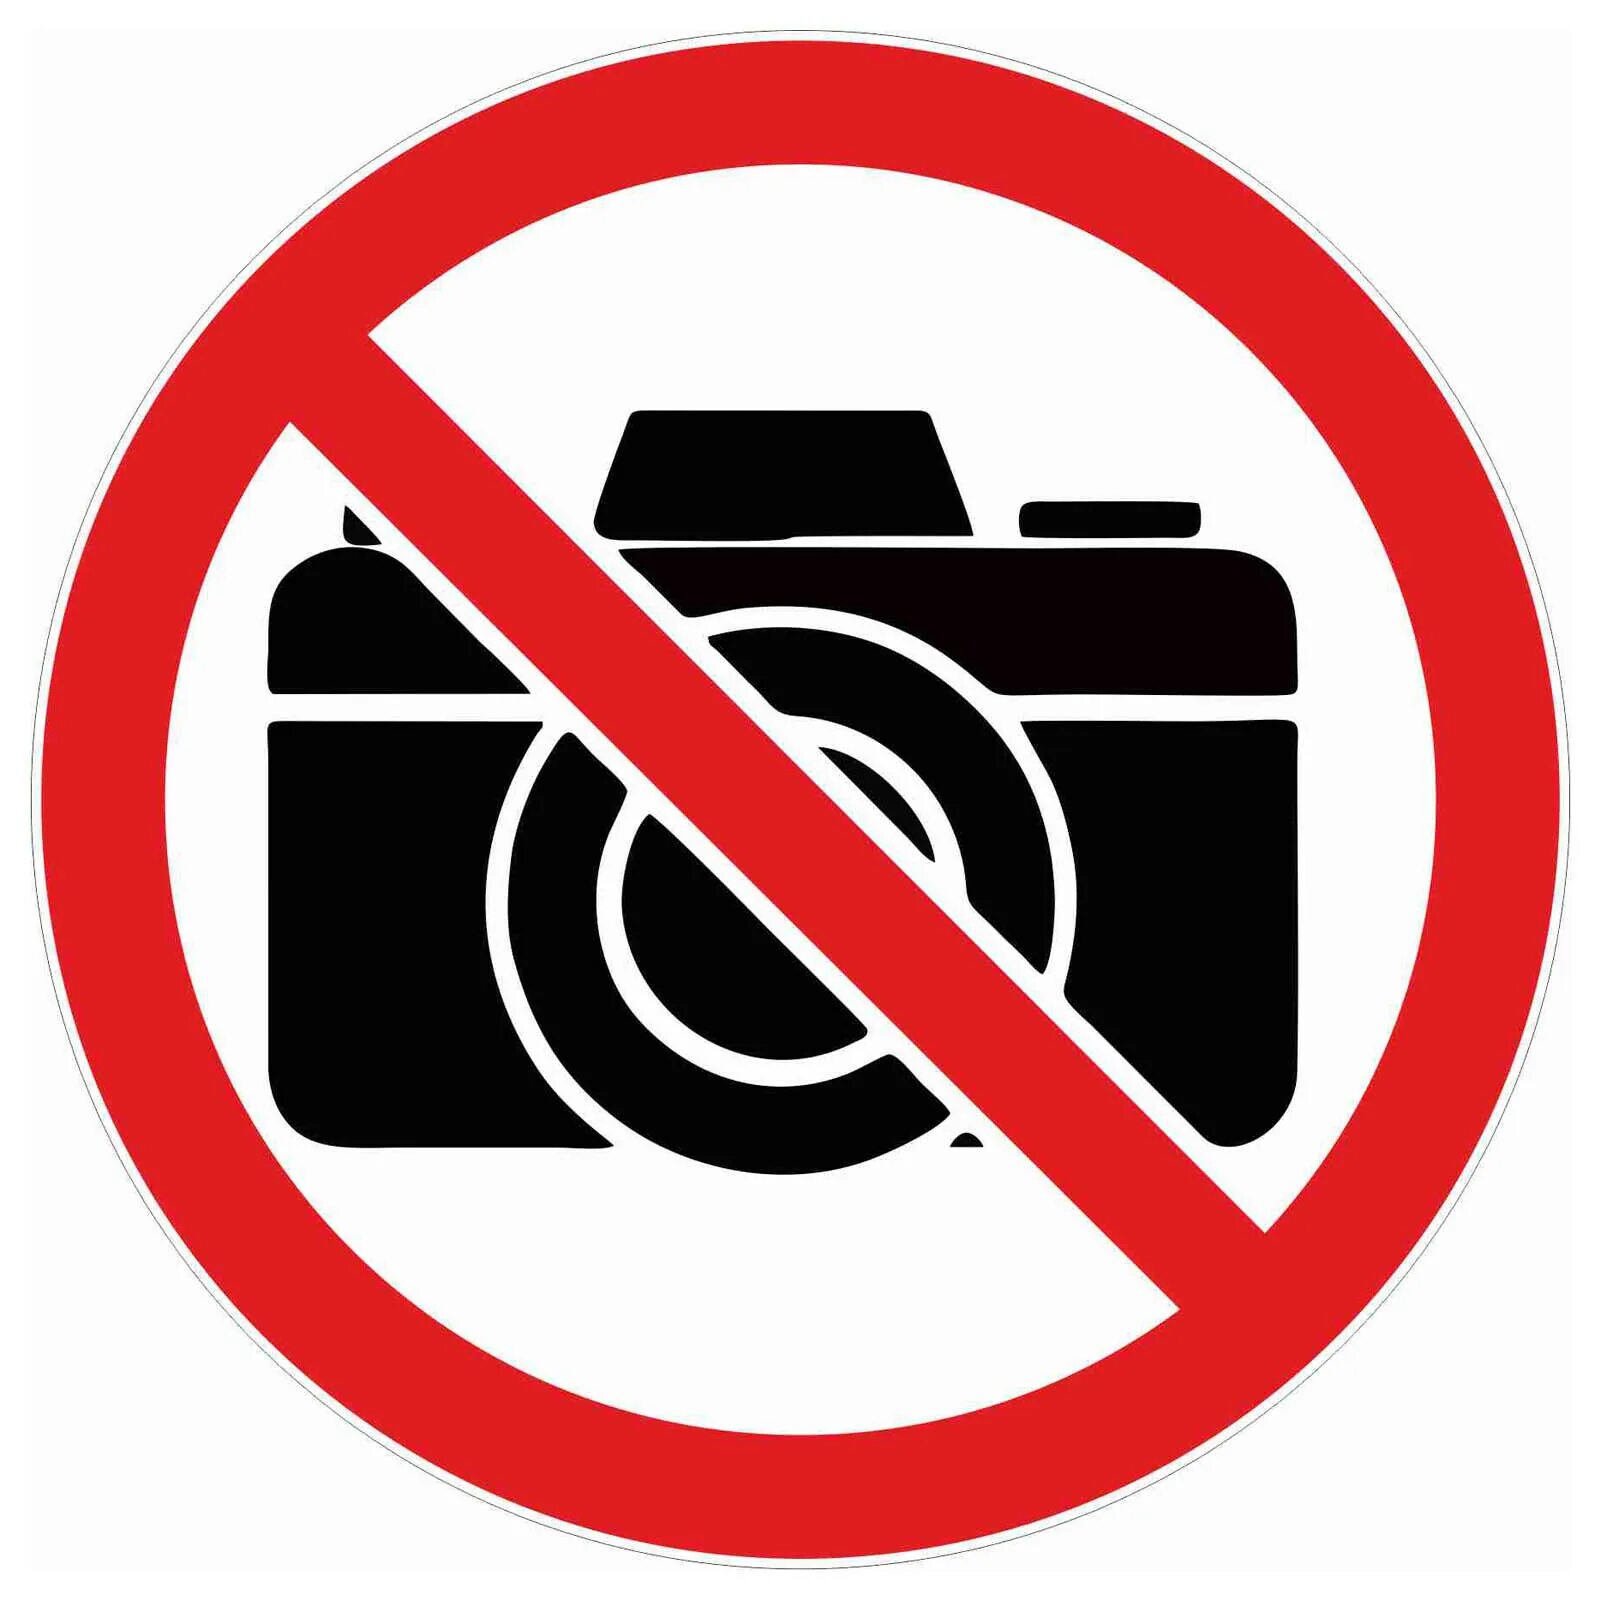 Фотосъемка запрещена знак. Табличка съемка запрещена. Фотографировать запрещено. Фотографировать запрещено знак.